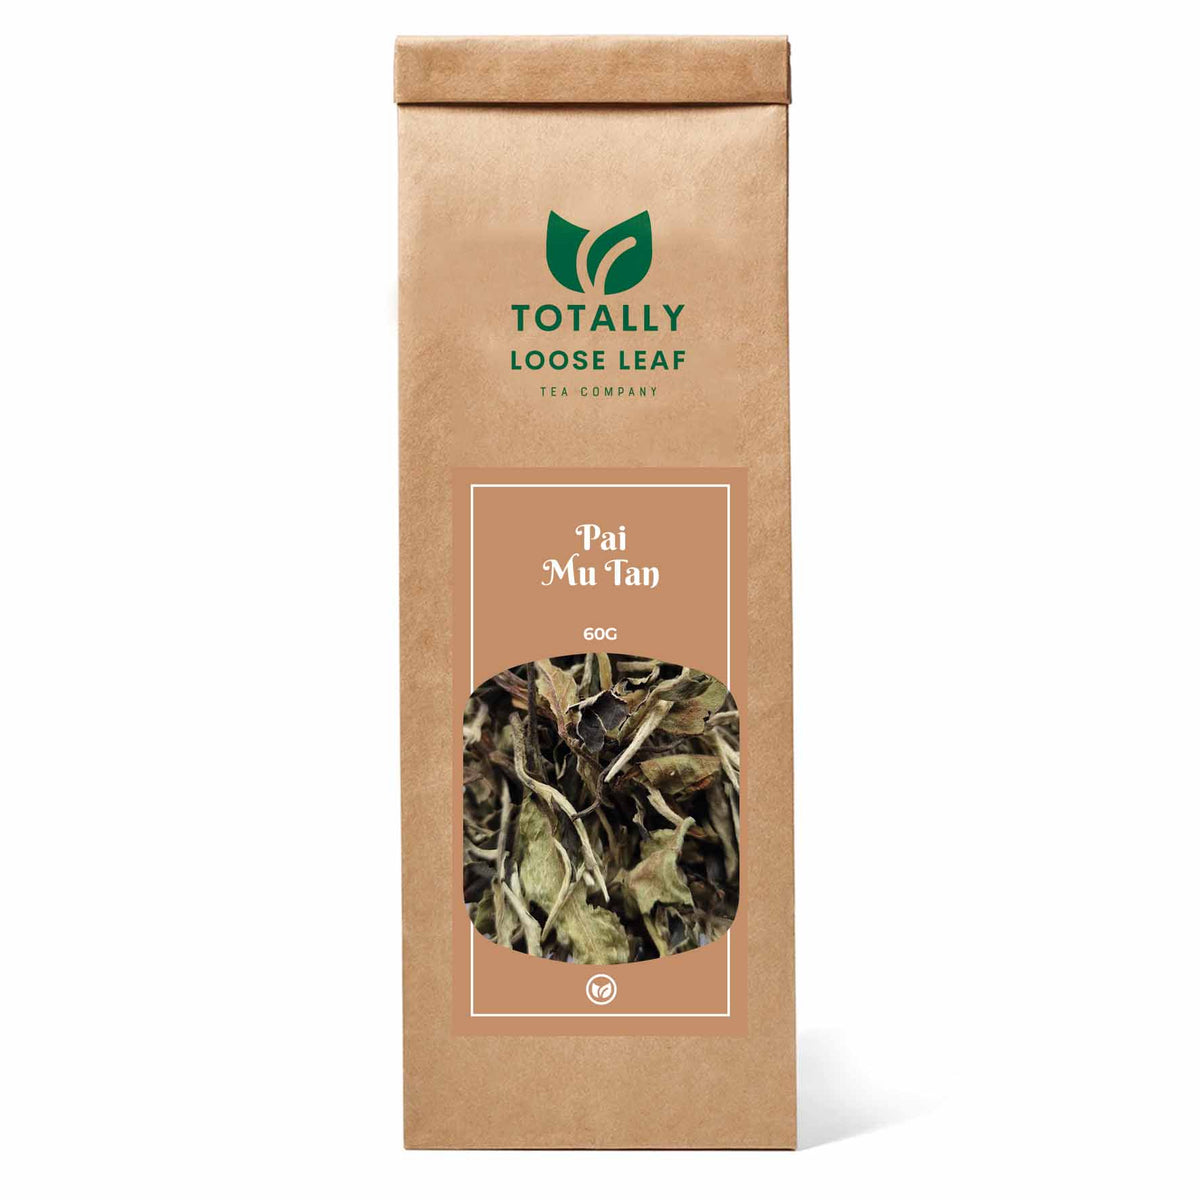 Pai Mu Tan White Loose Leaf Tea - one pouch